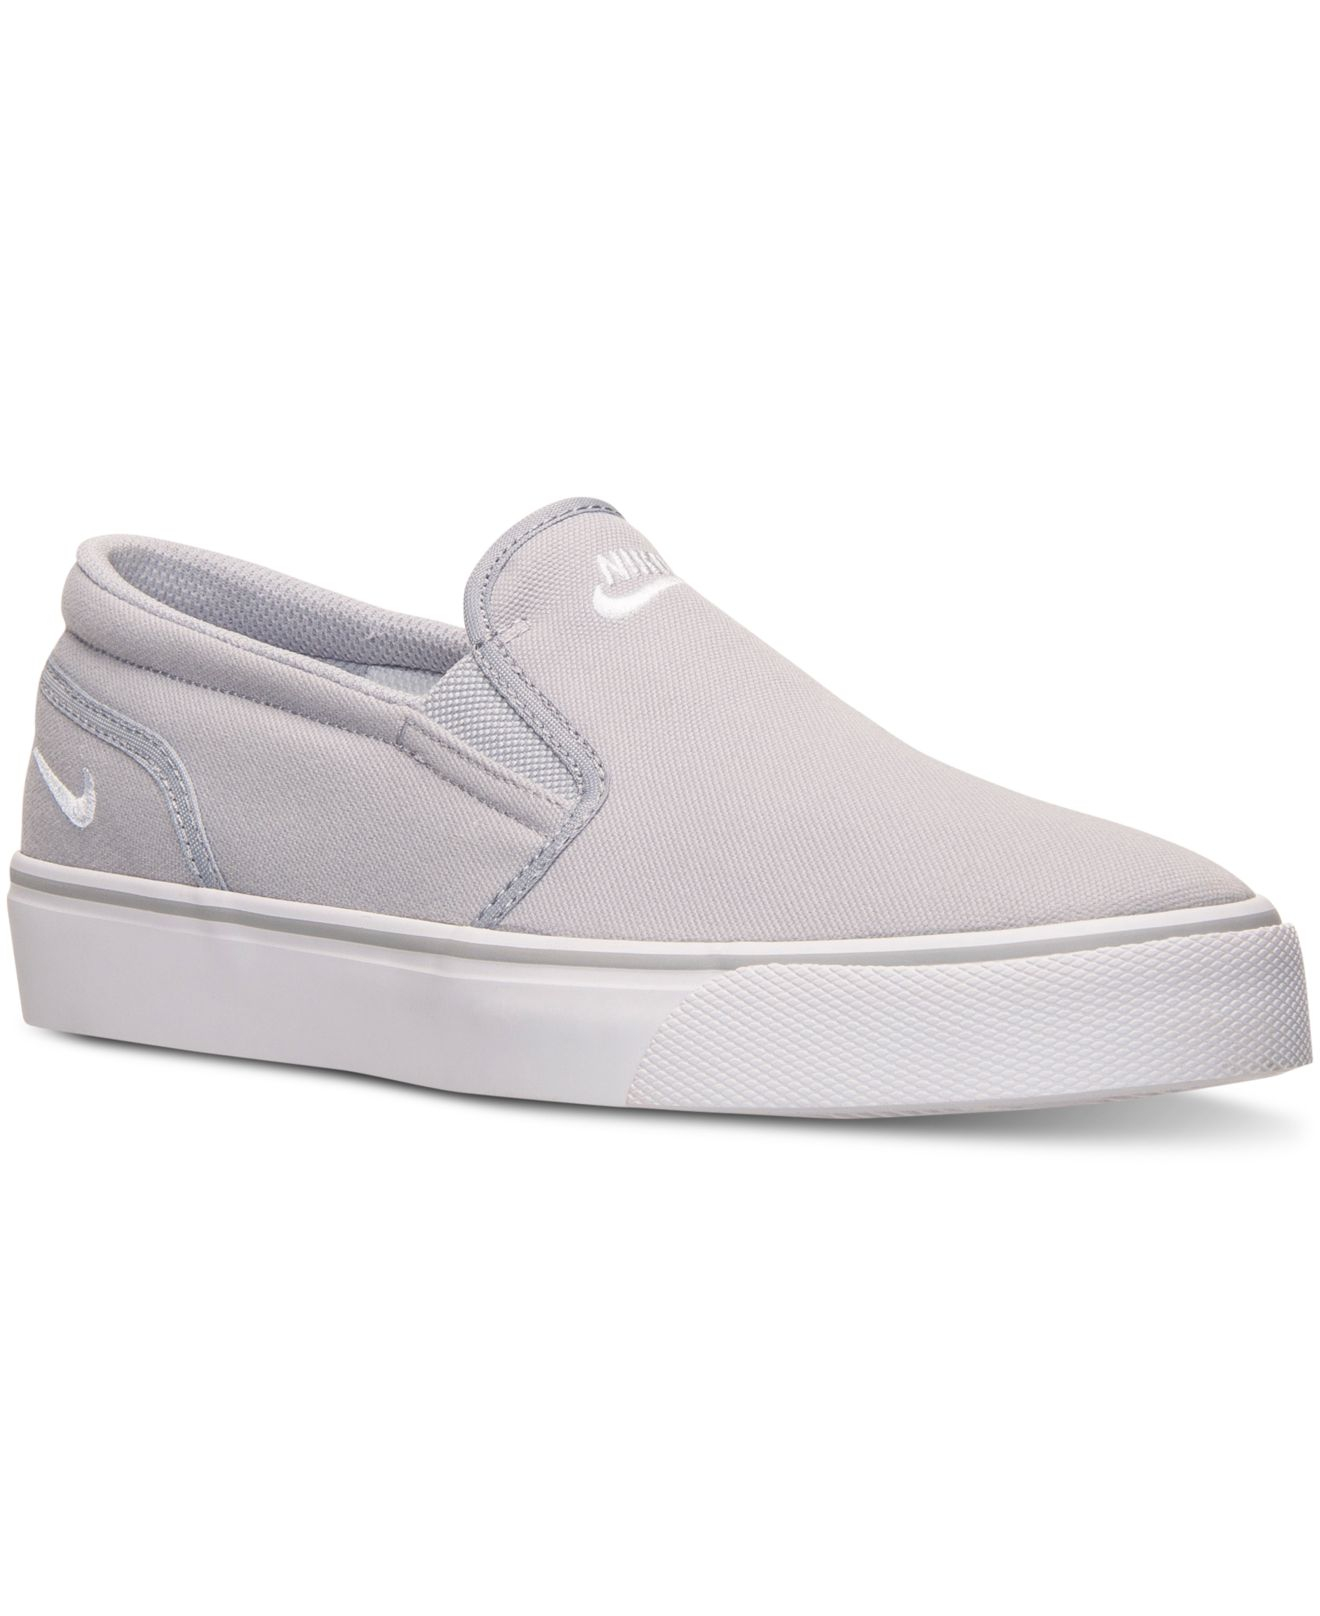 nike gray slip on shoes online -